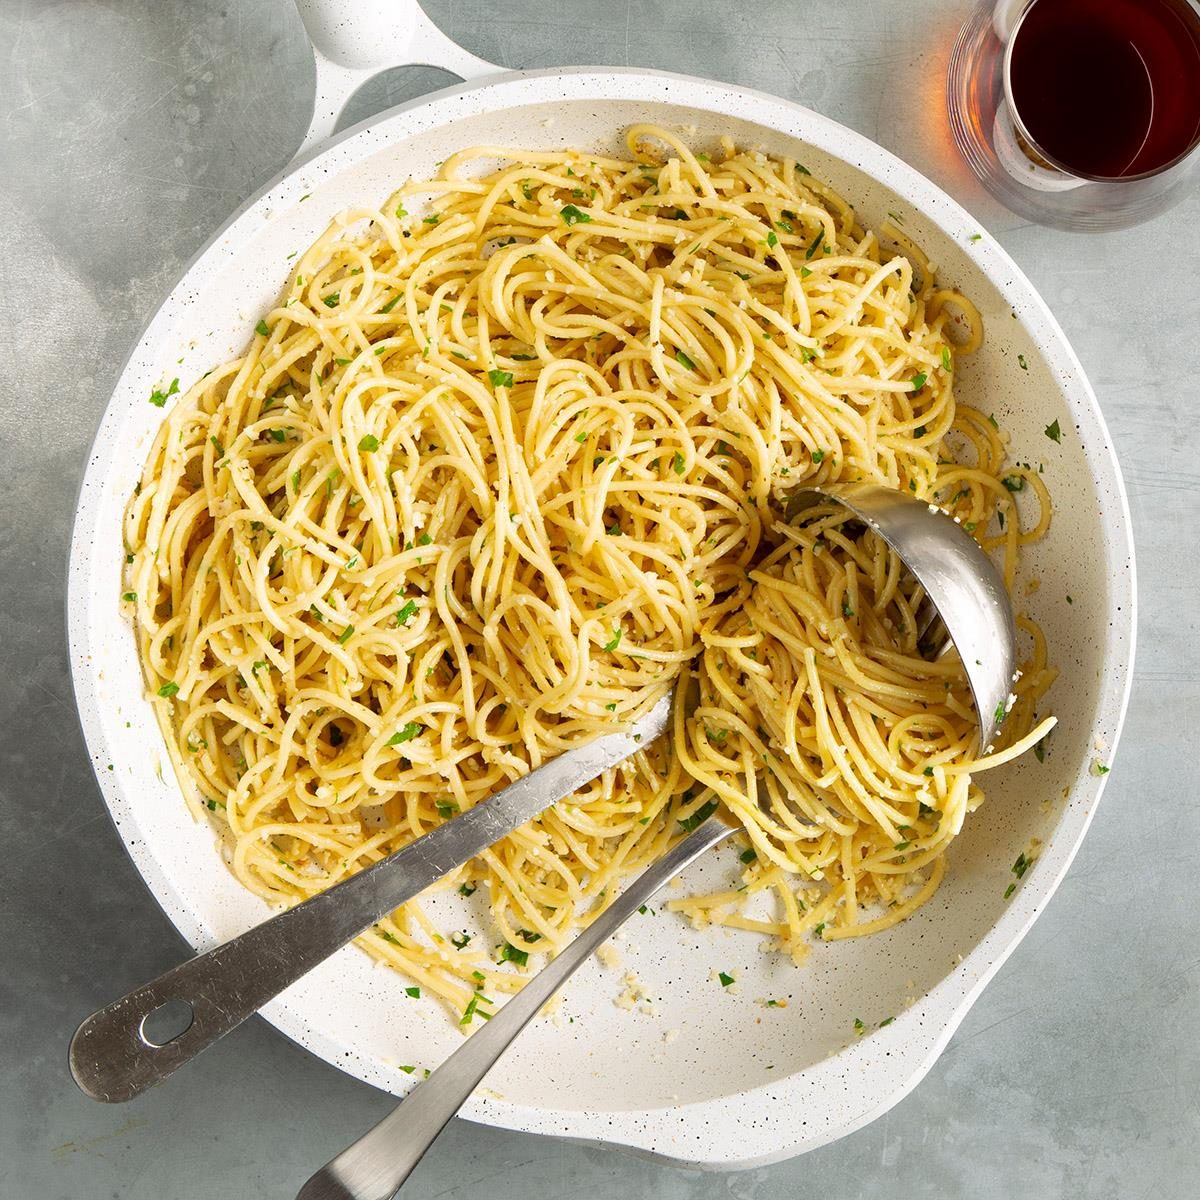 Garlic Spaghetti Recipe: How to Make It